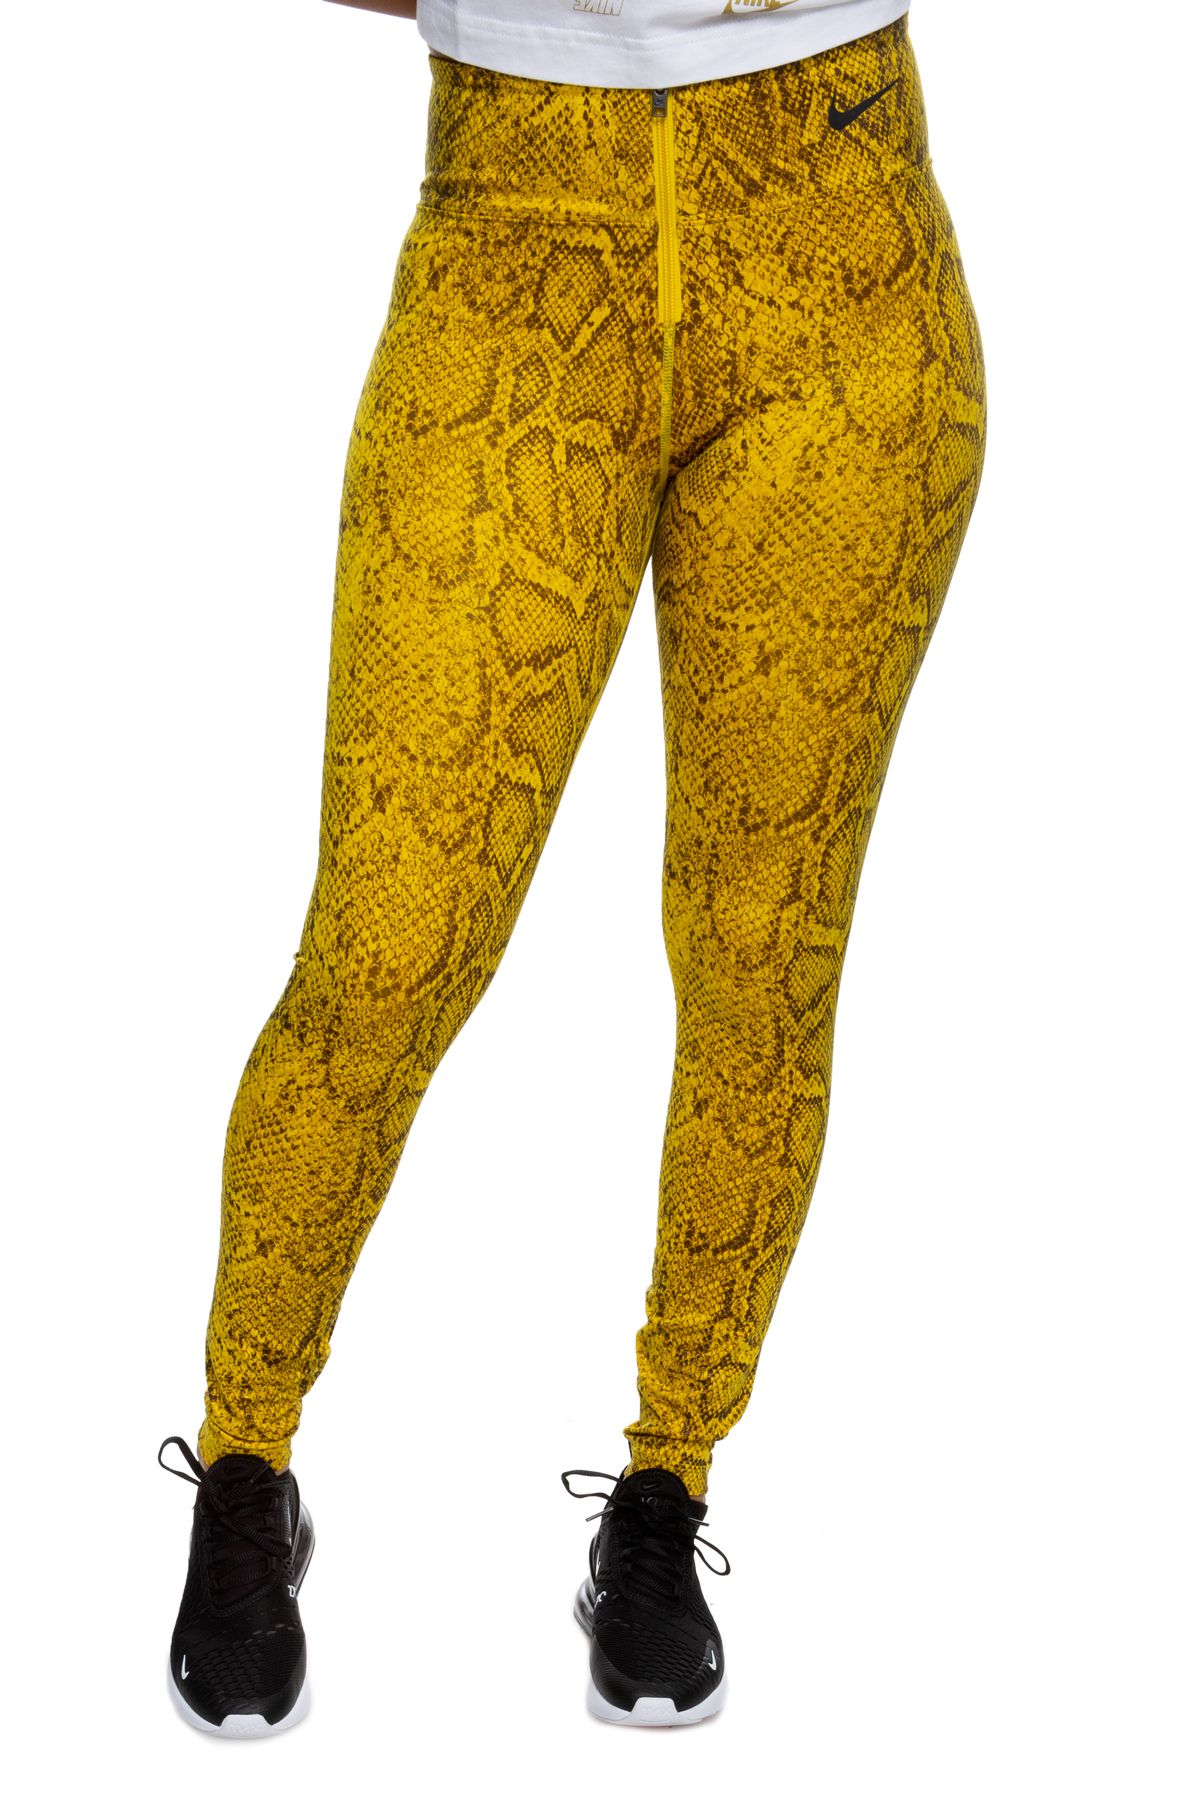 nike yellow snake print leggings